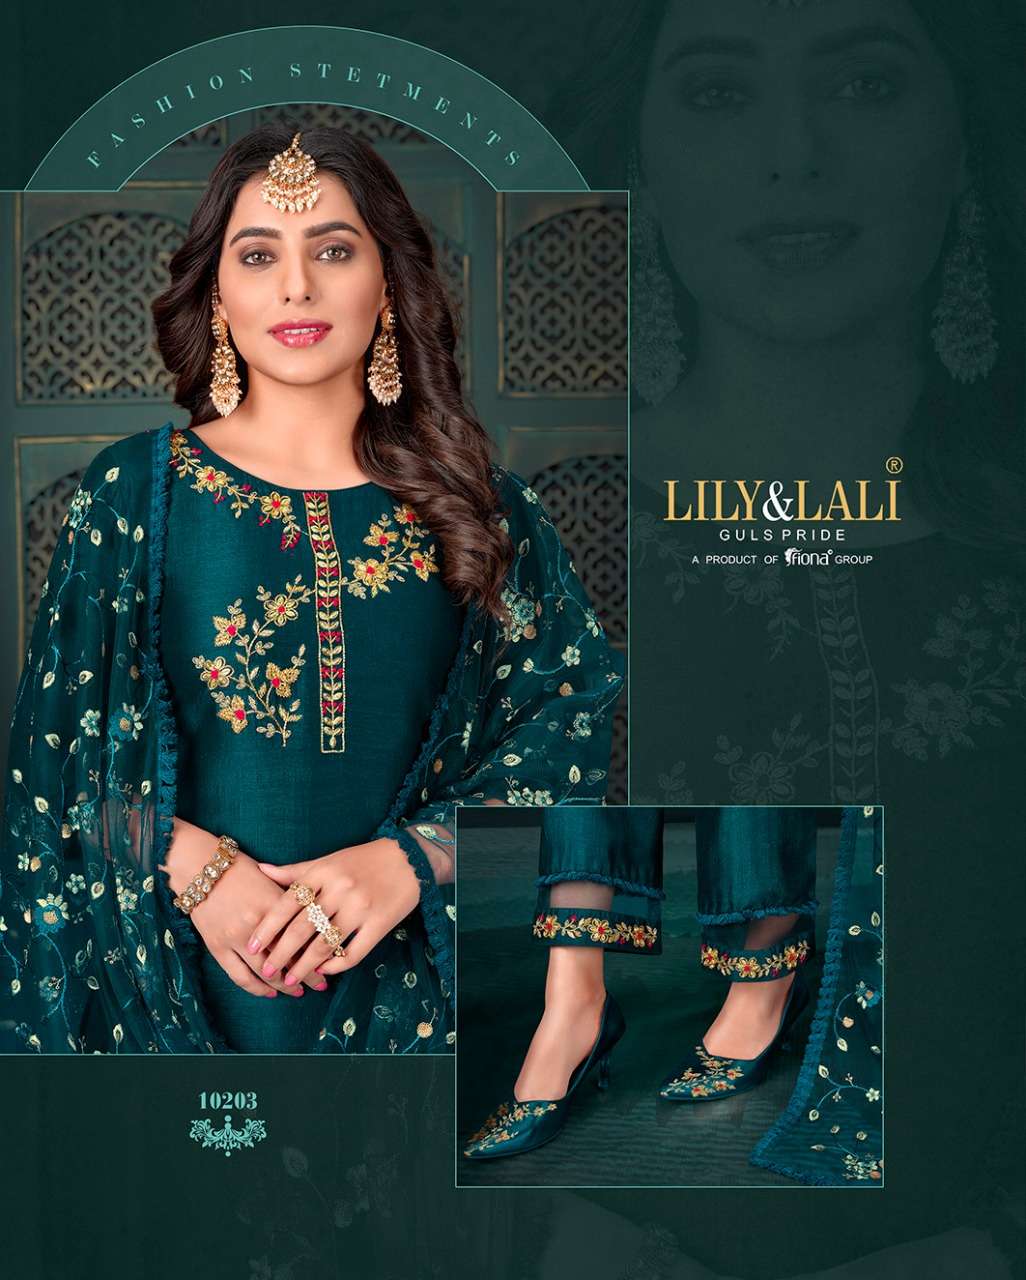 lily&lali maria vol-9 10201-10206 series super silk with handwork designer kurtis bottom with dupatta set wholesale price 